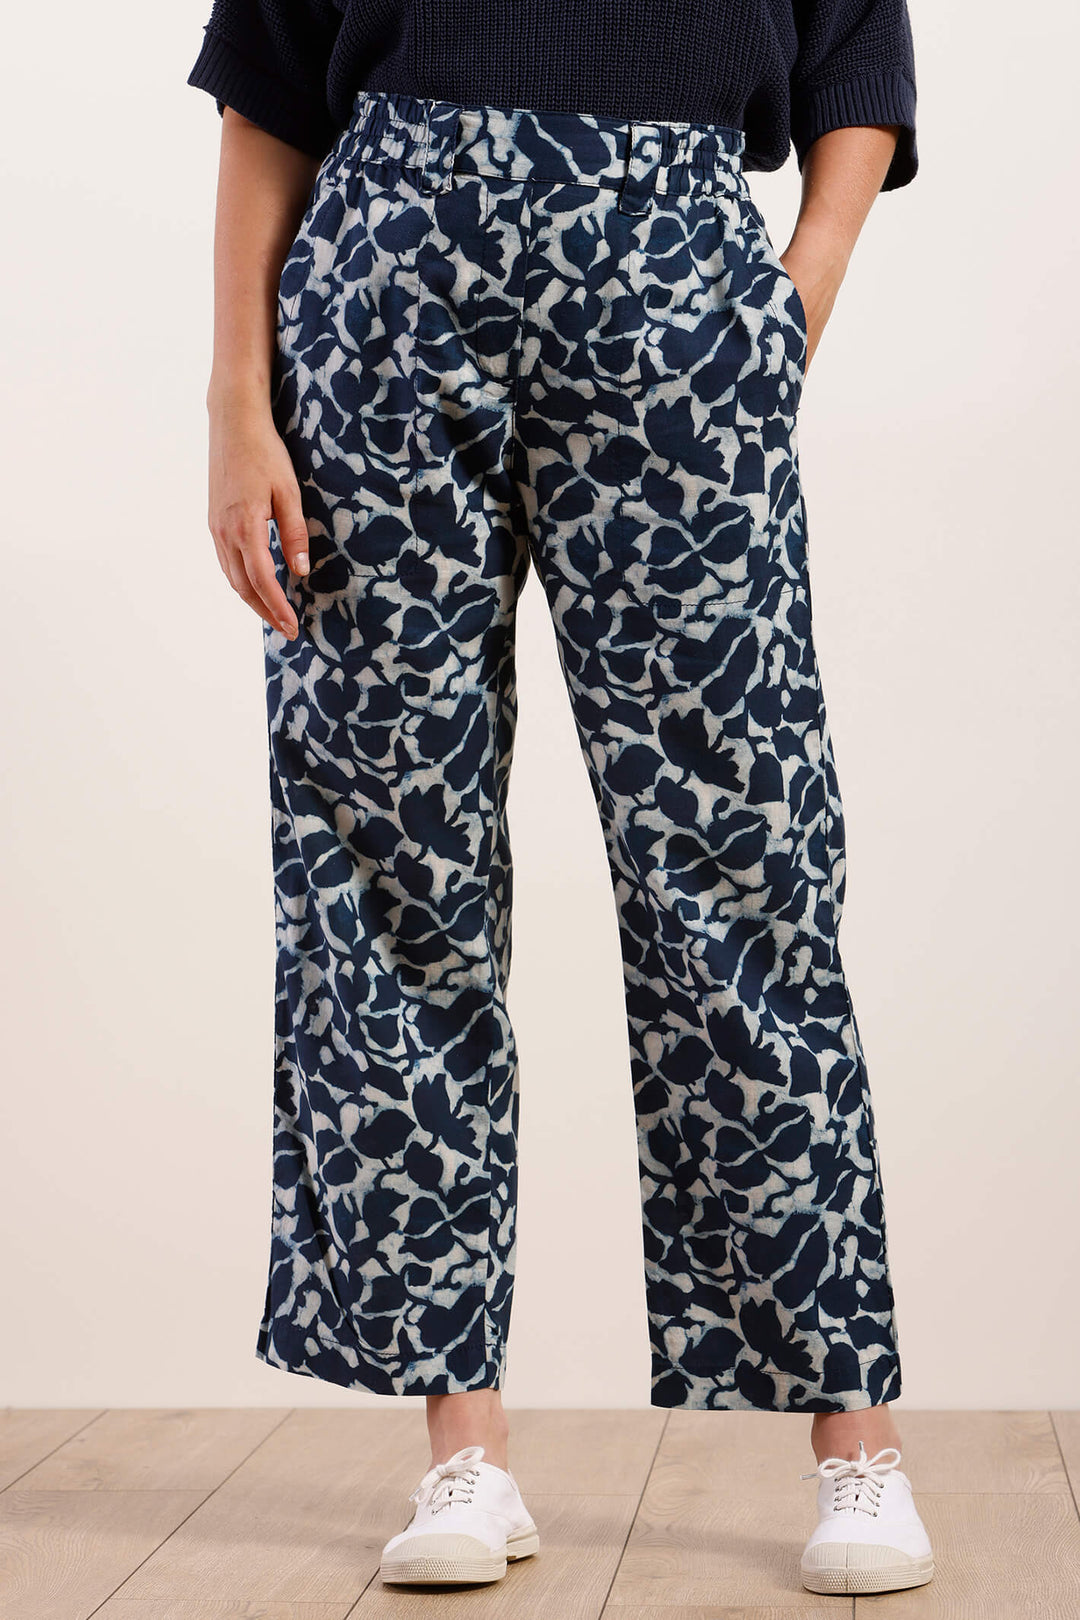 Mat De Misaine 10244 Polder Indigo Blue Print Trousers - Shirley Allum Boutique